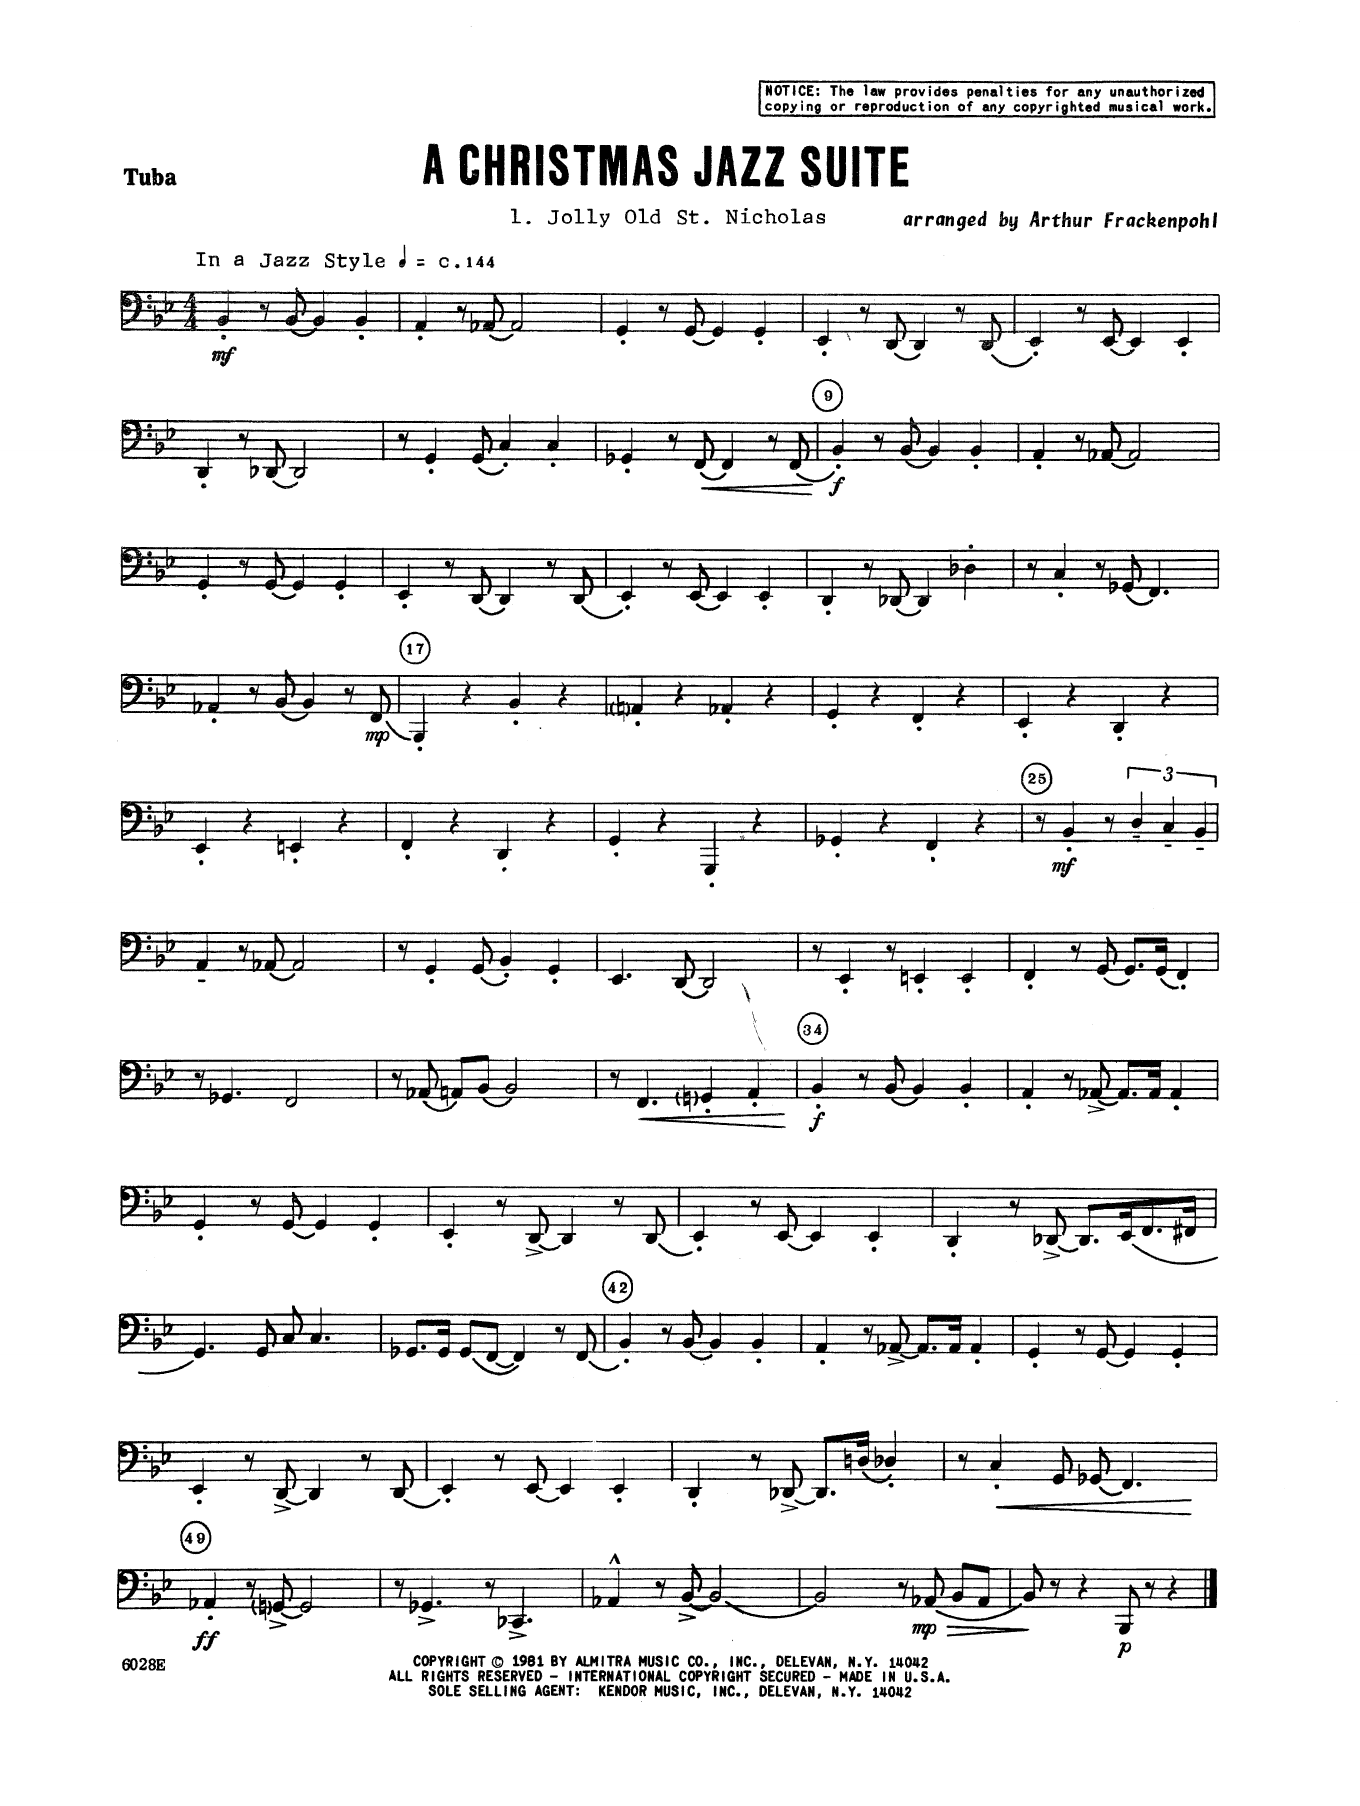 Download Arthur Frackenpohl Christmas Jazz Suite - Tuba Sheet Music